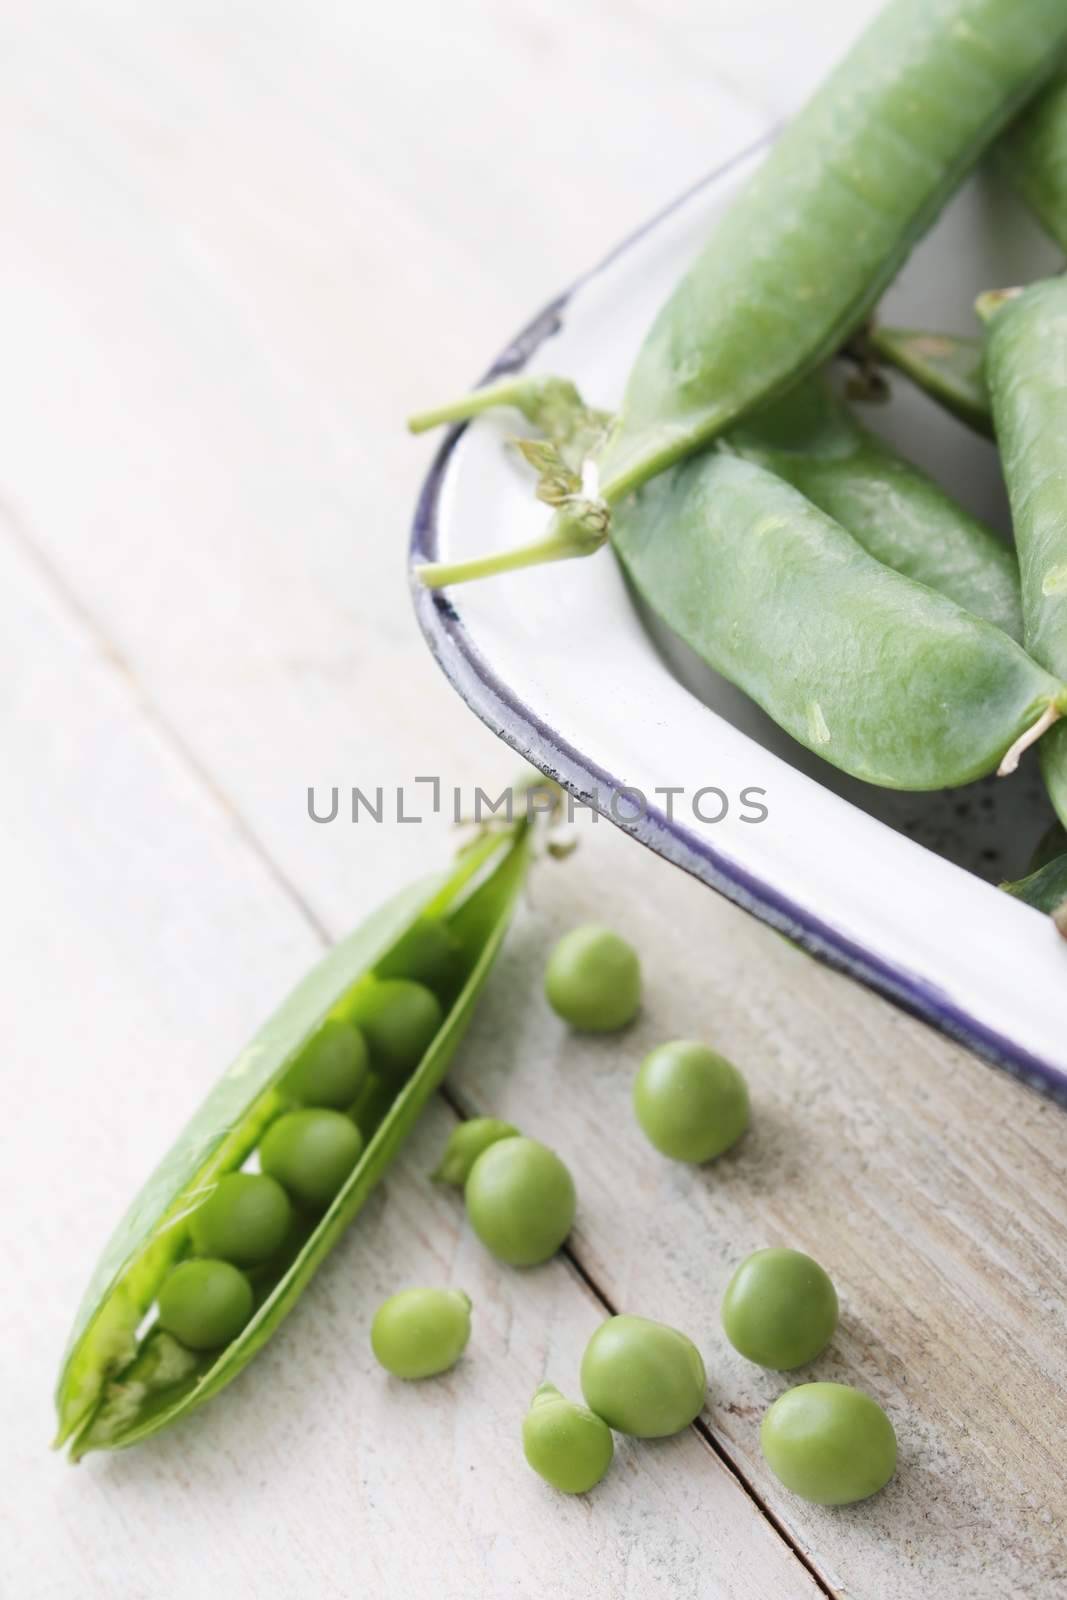 fresh garden peas in pod